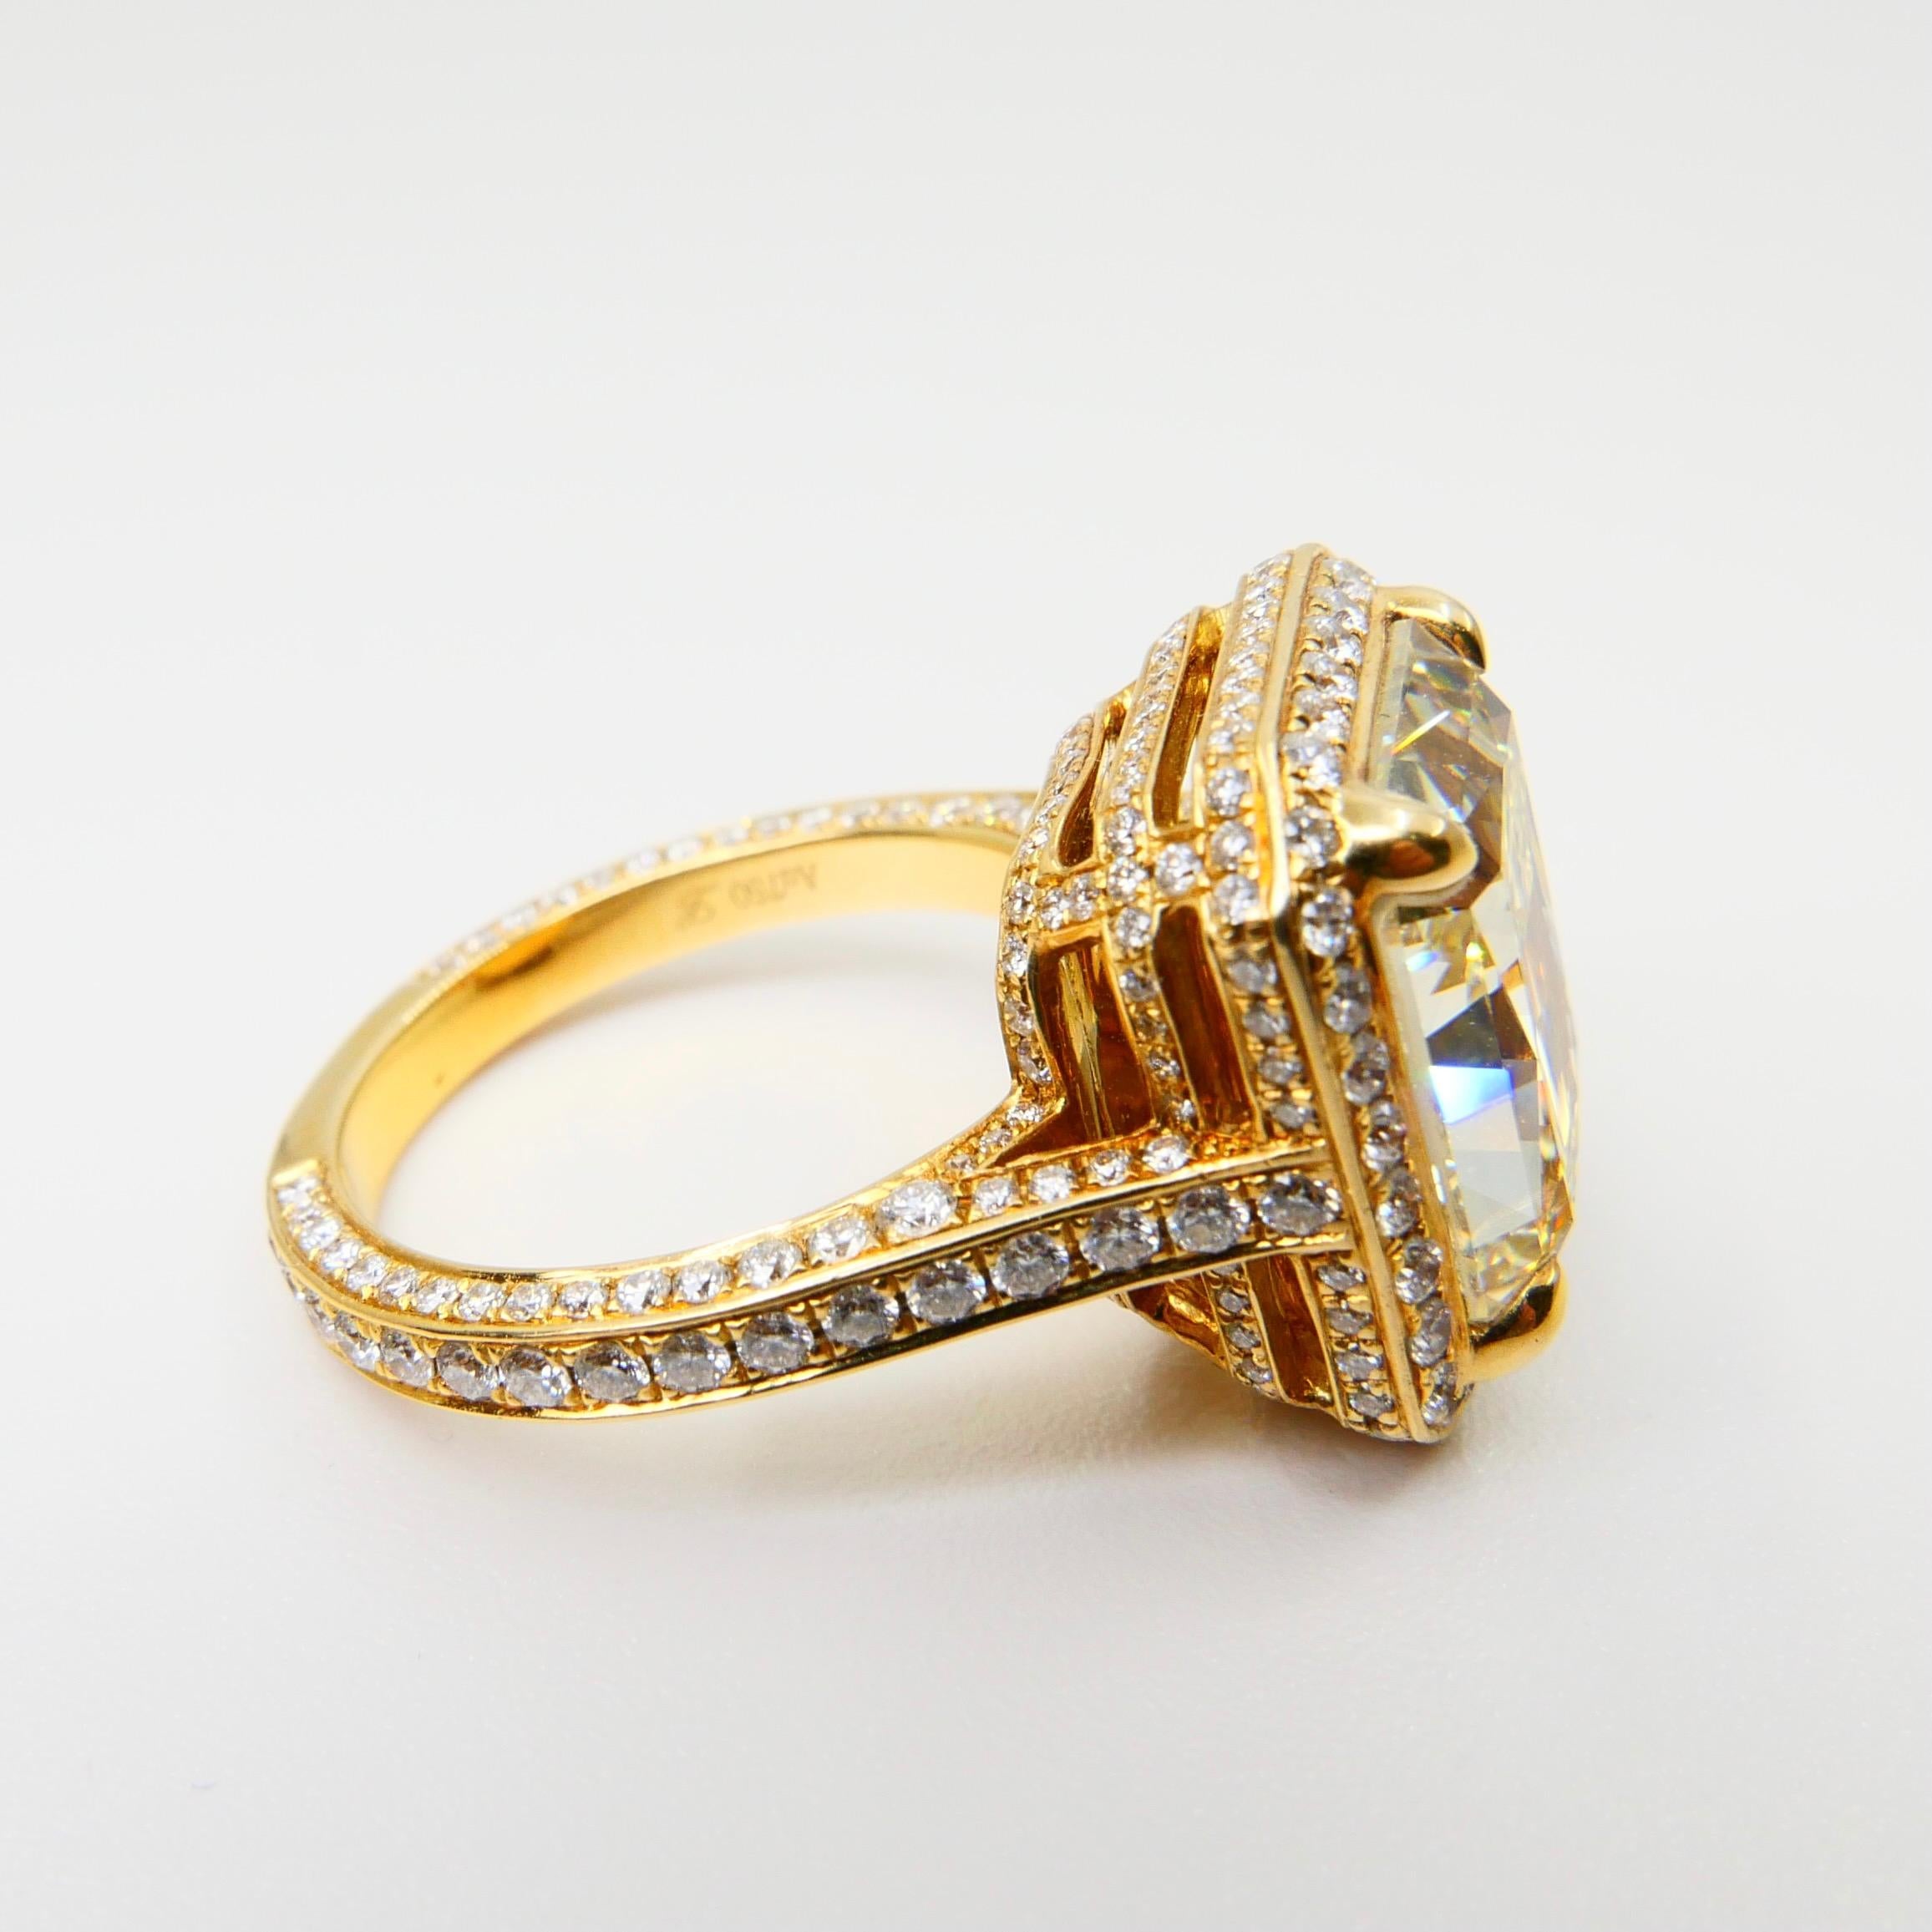 GIA Certified 9 Carat Yellow Diamond Engagement Ring, Oversized & Eye Clean 6